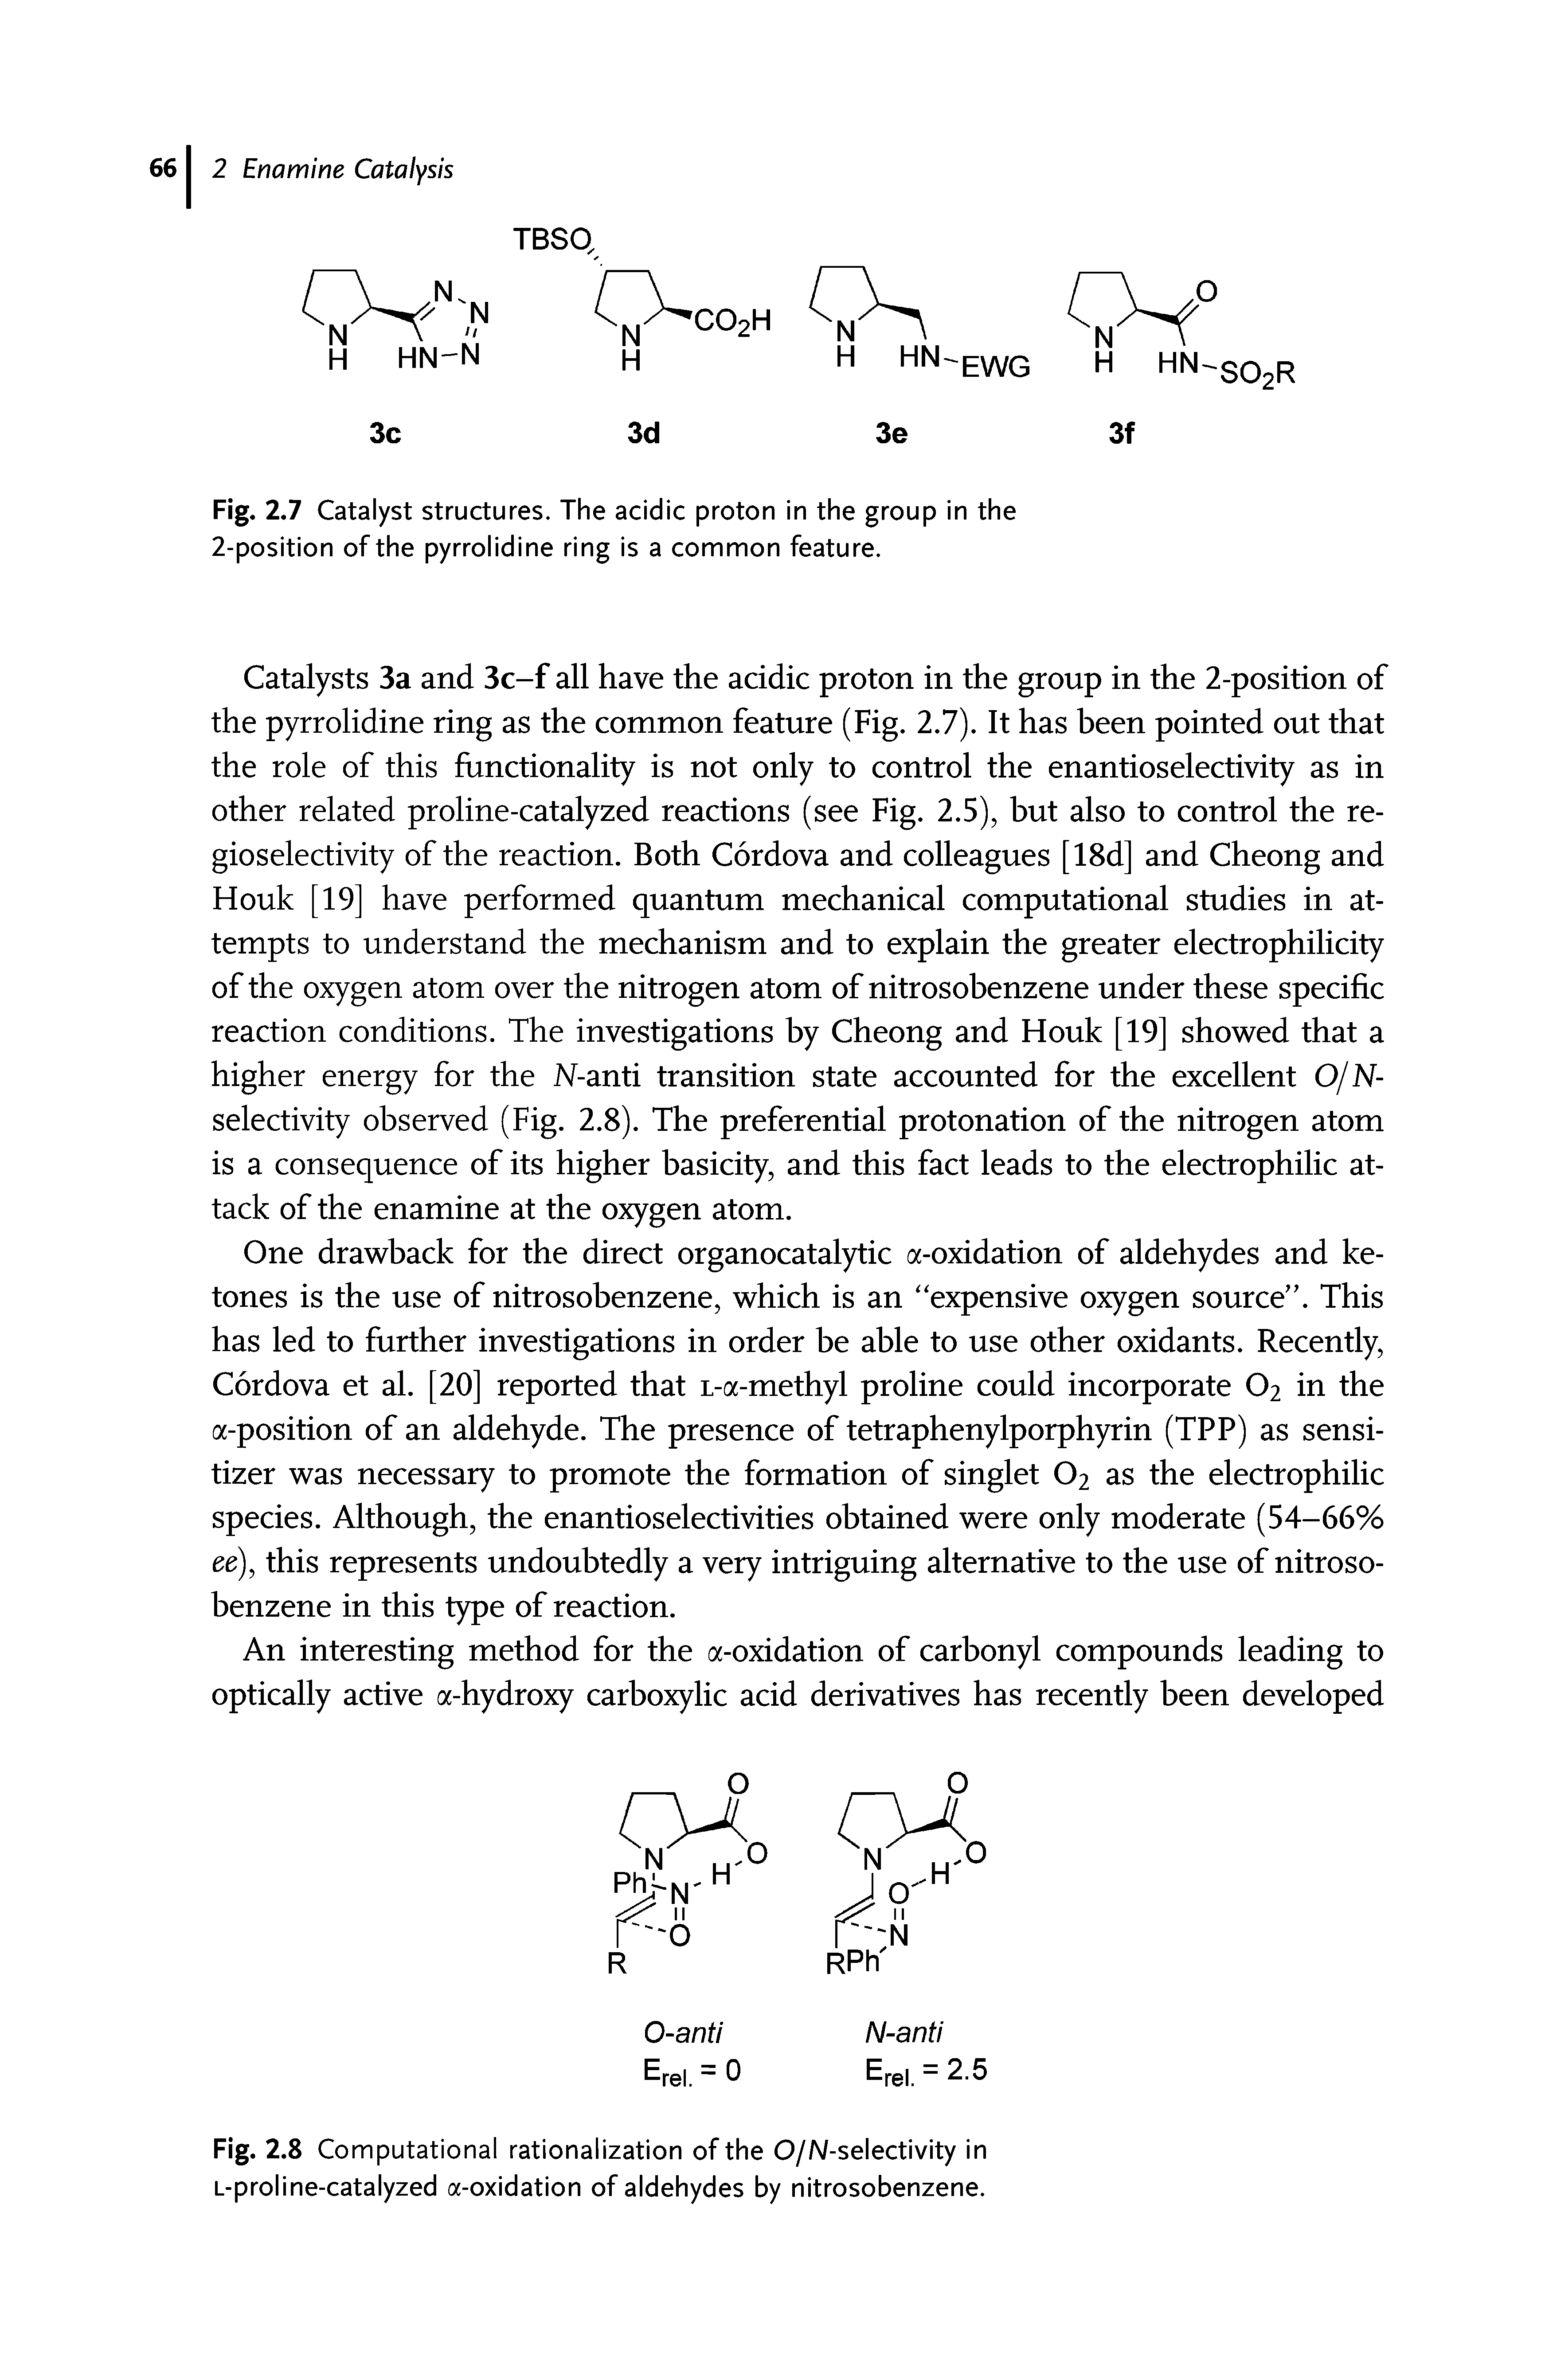 Fig. 2.8 Computational rationalization of the O/N-selectivity in l-proline-catalyzed a-oxidation of aldehydes by nitrosobenzene.